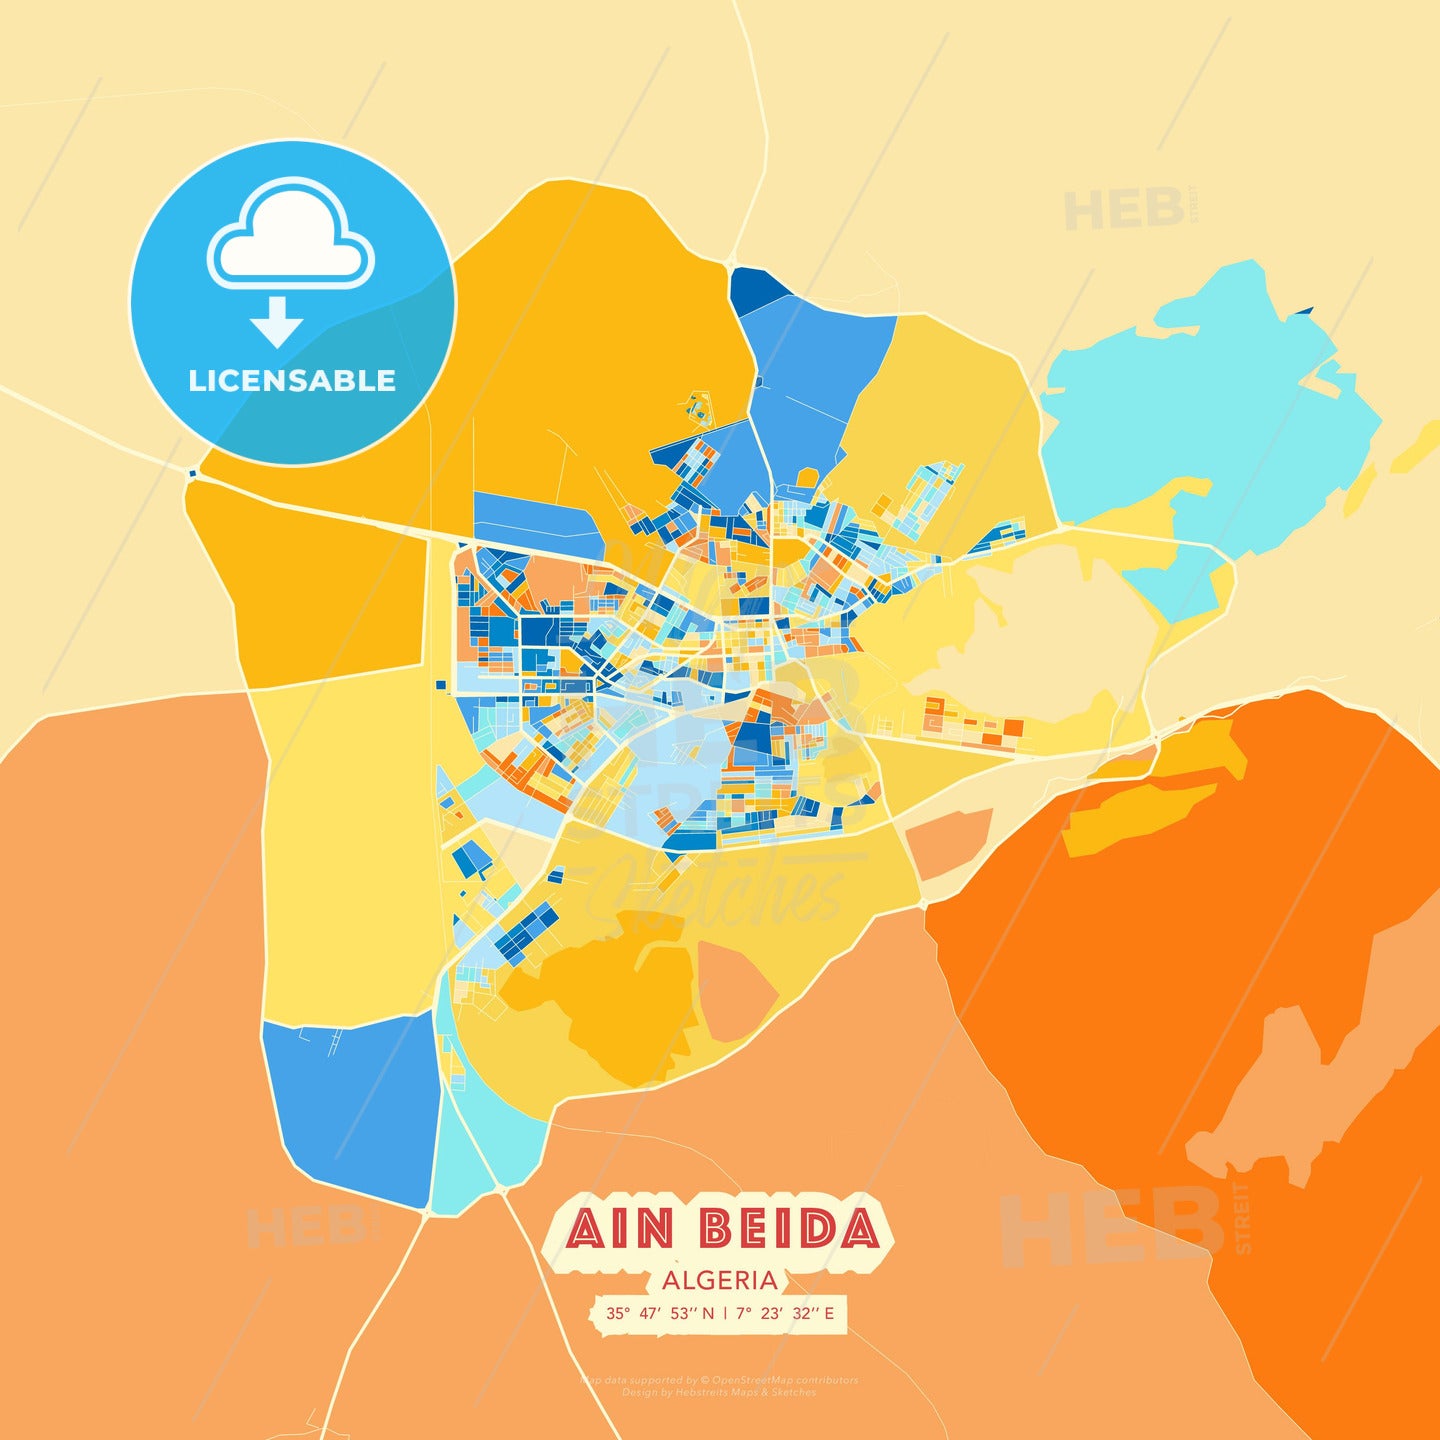 Ain Beida, Algeria, map - HEBSTREITS Sketches